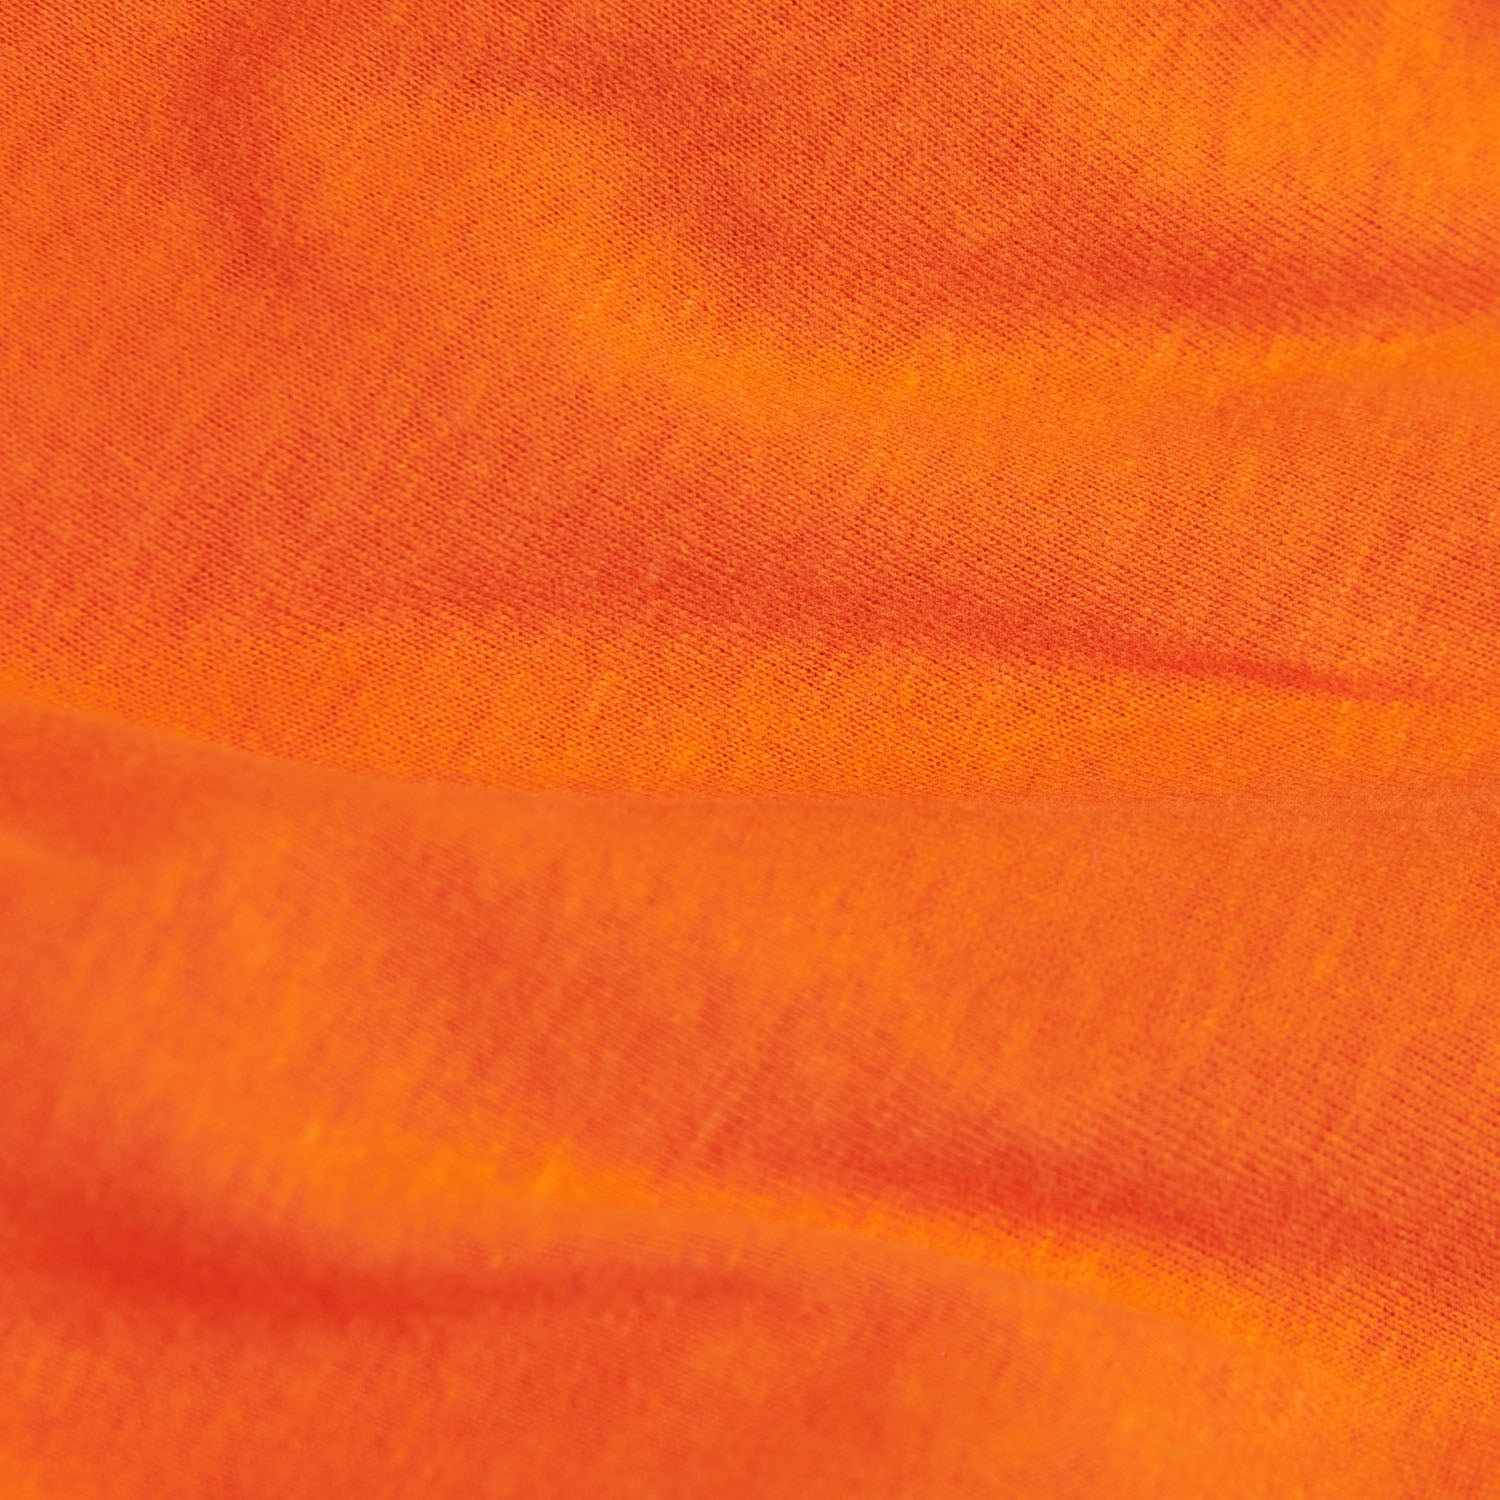 Orange V-Neck T-Shirt